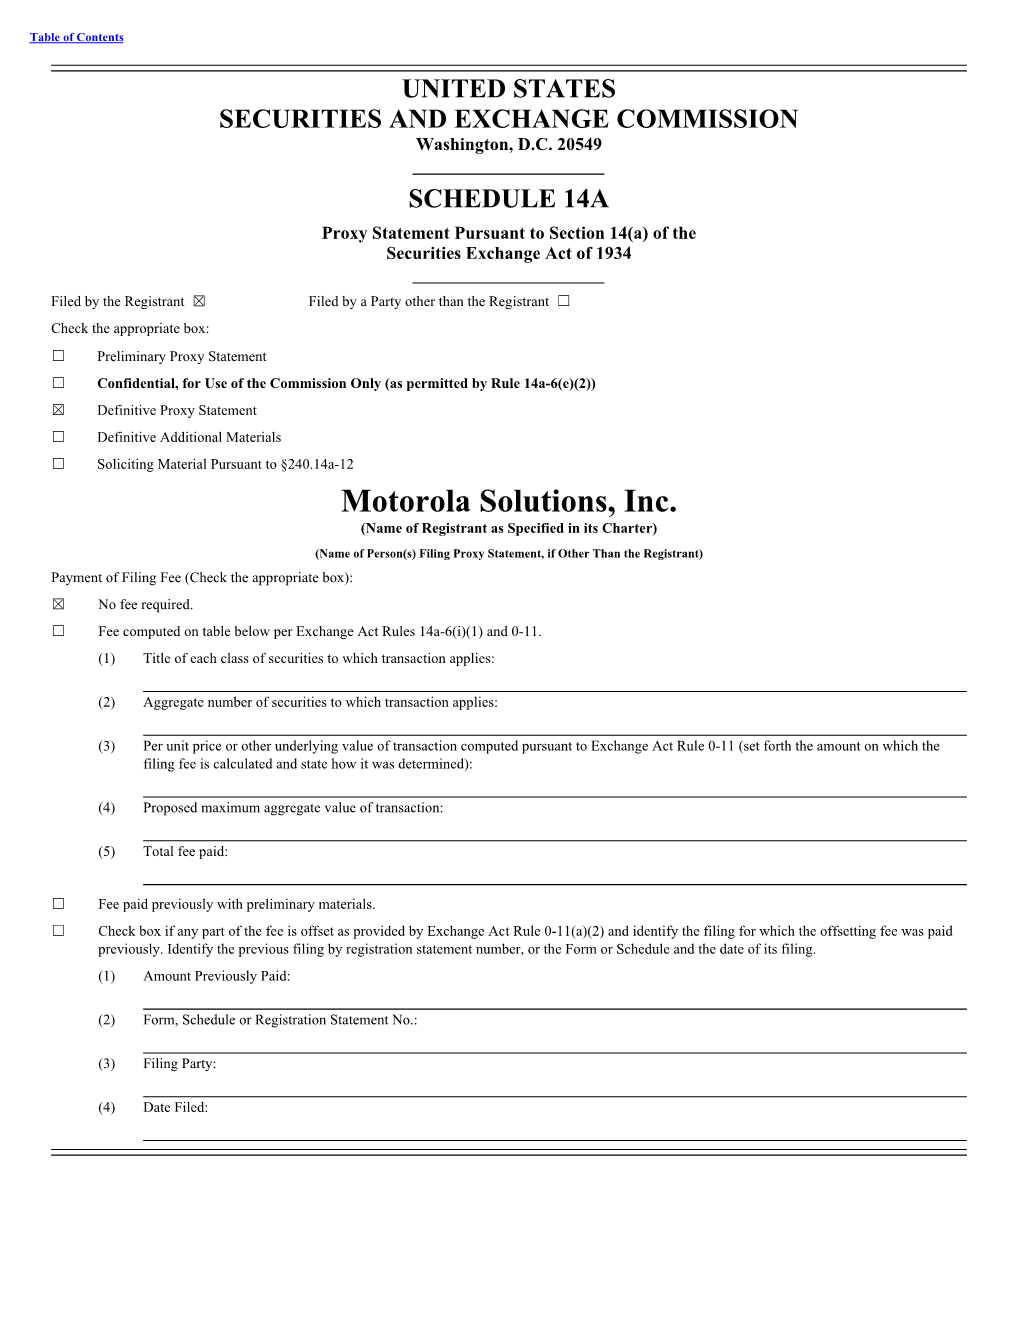 Motorola Solutions, Inc